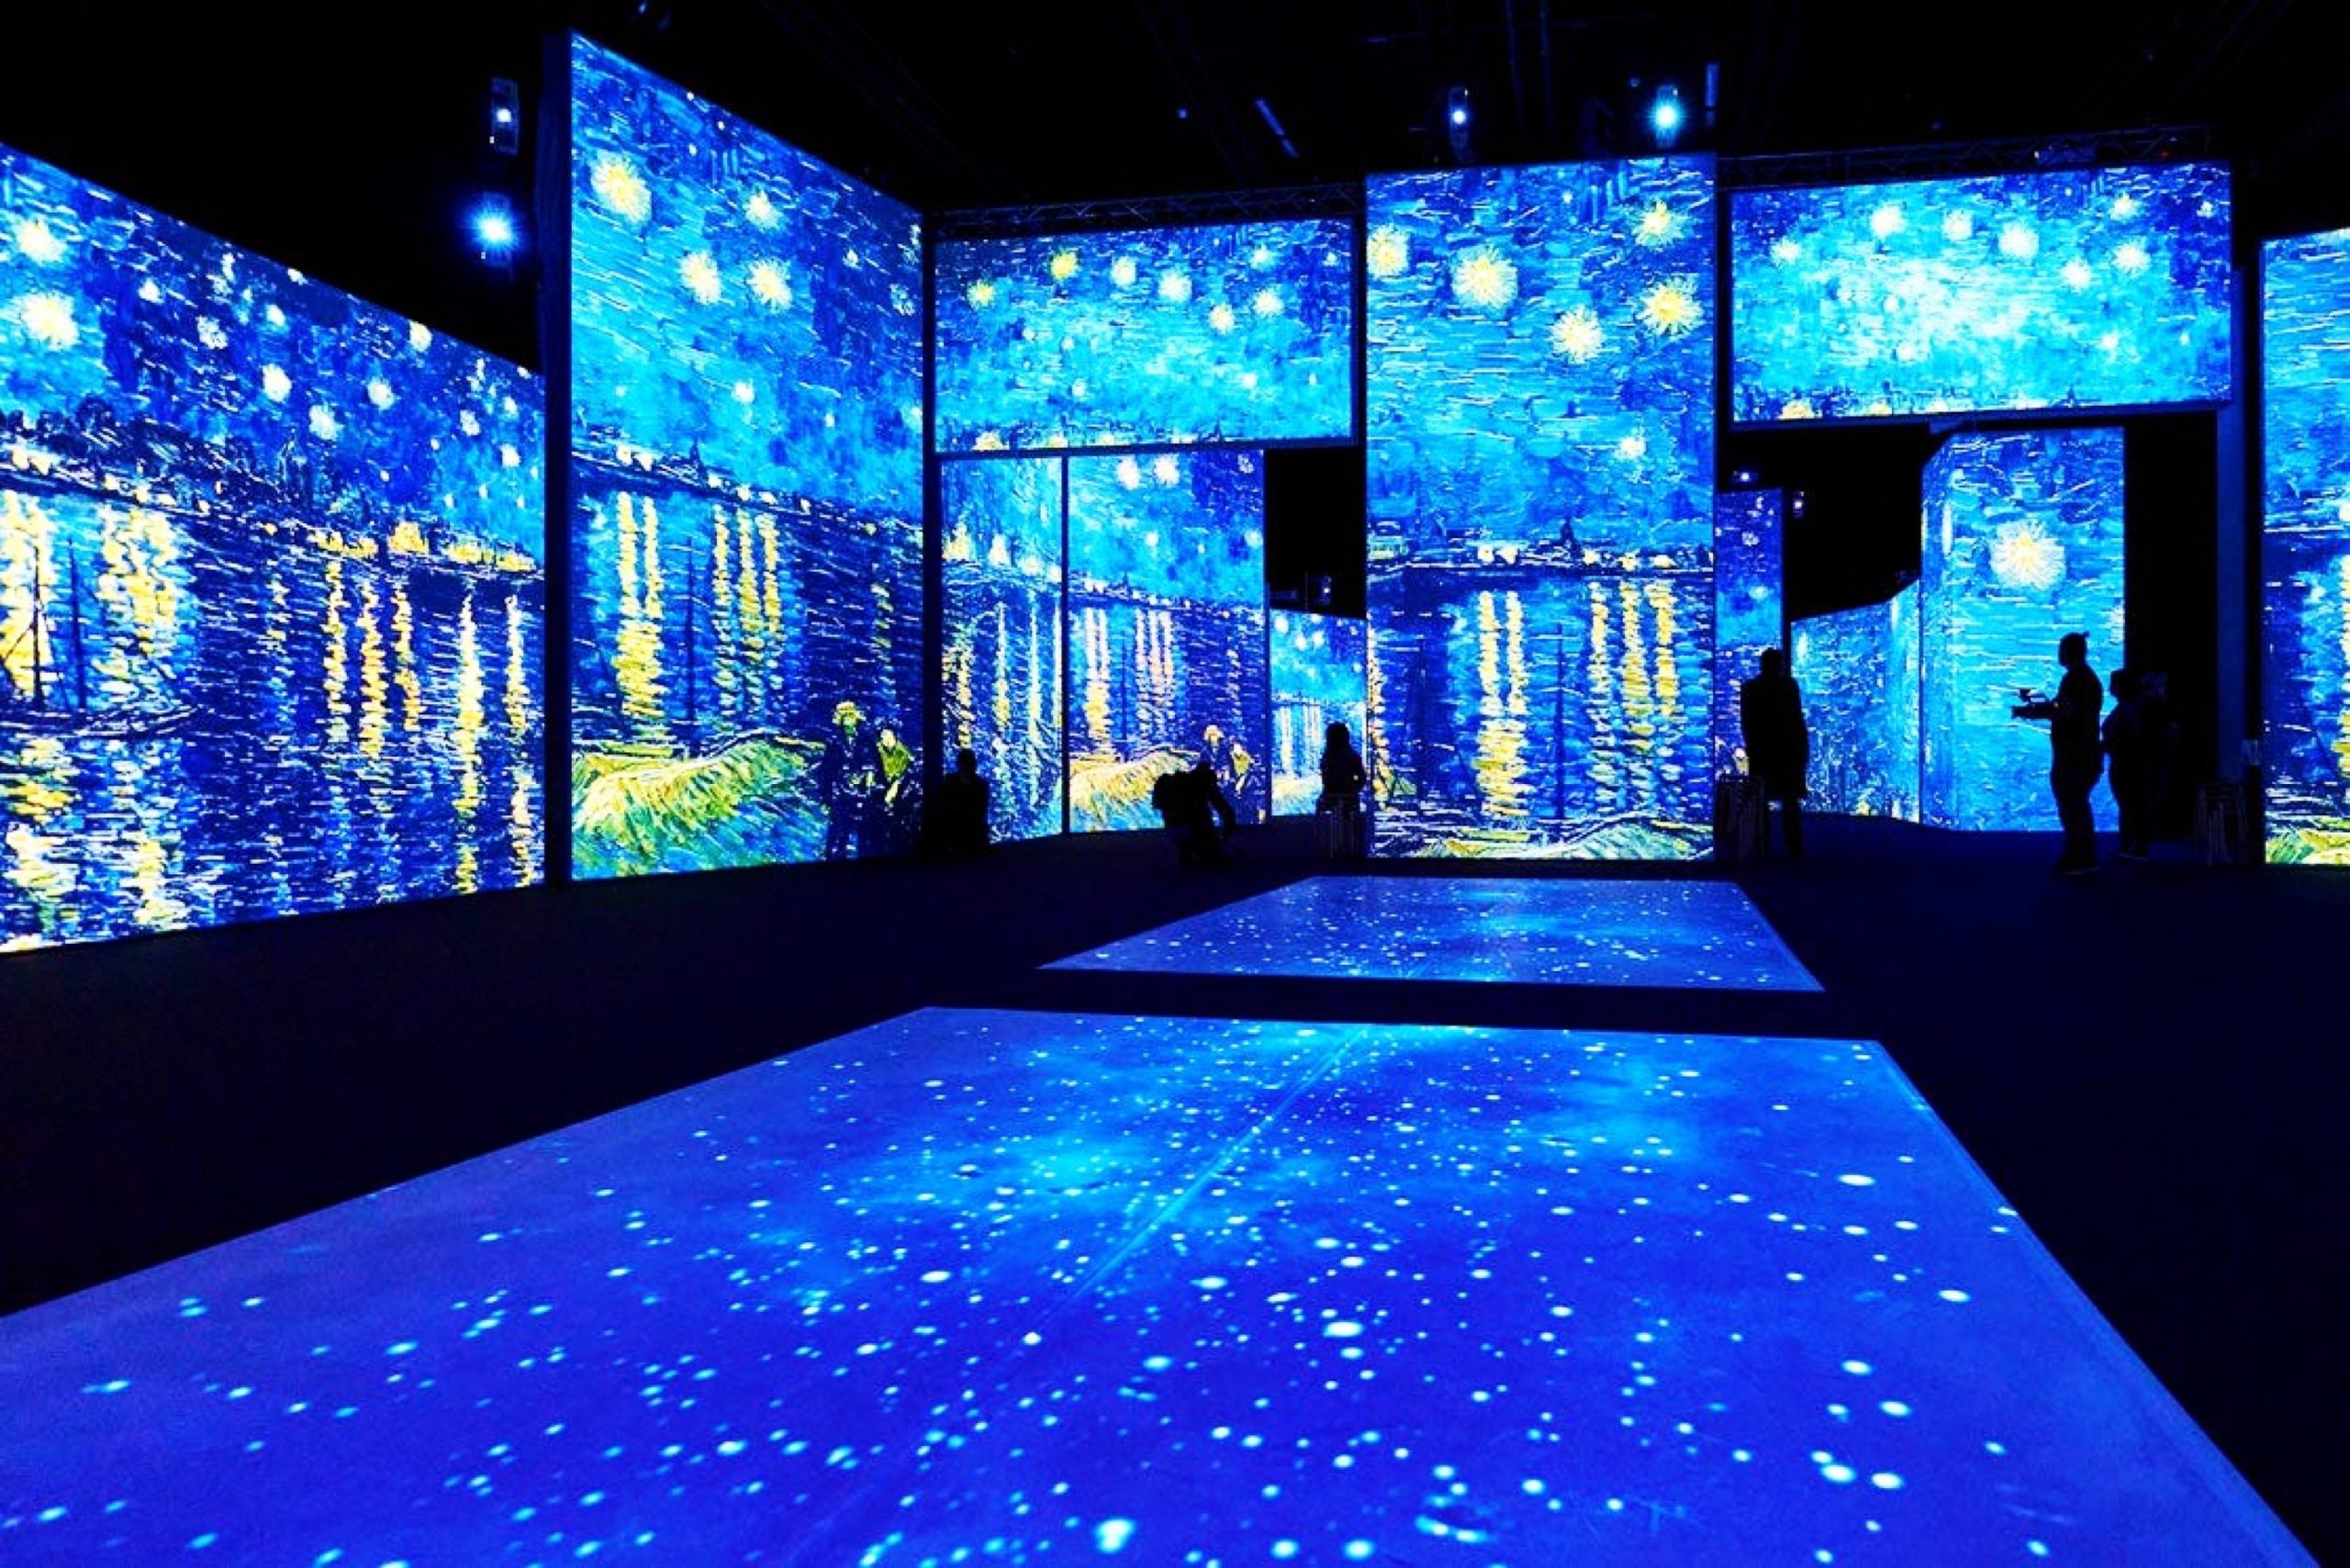 <img src="Van.jpg" alt="Van Gogh Alive Starry Night Installation"/> 